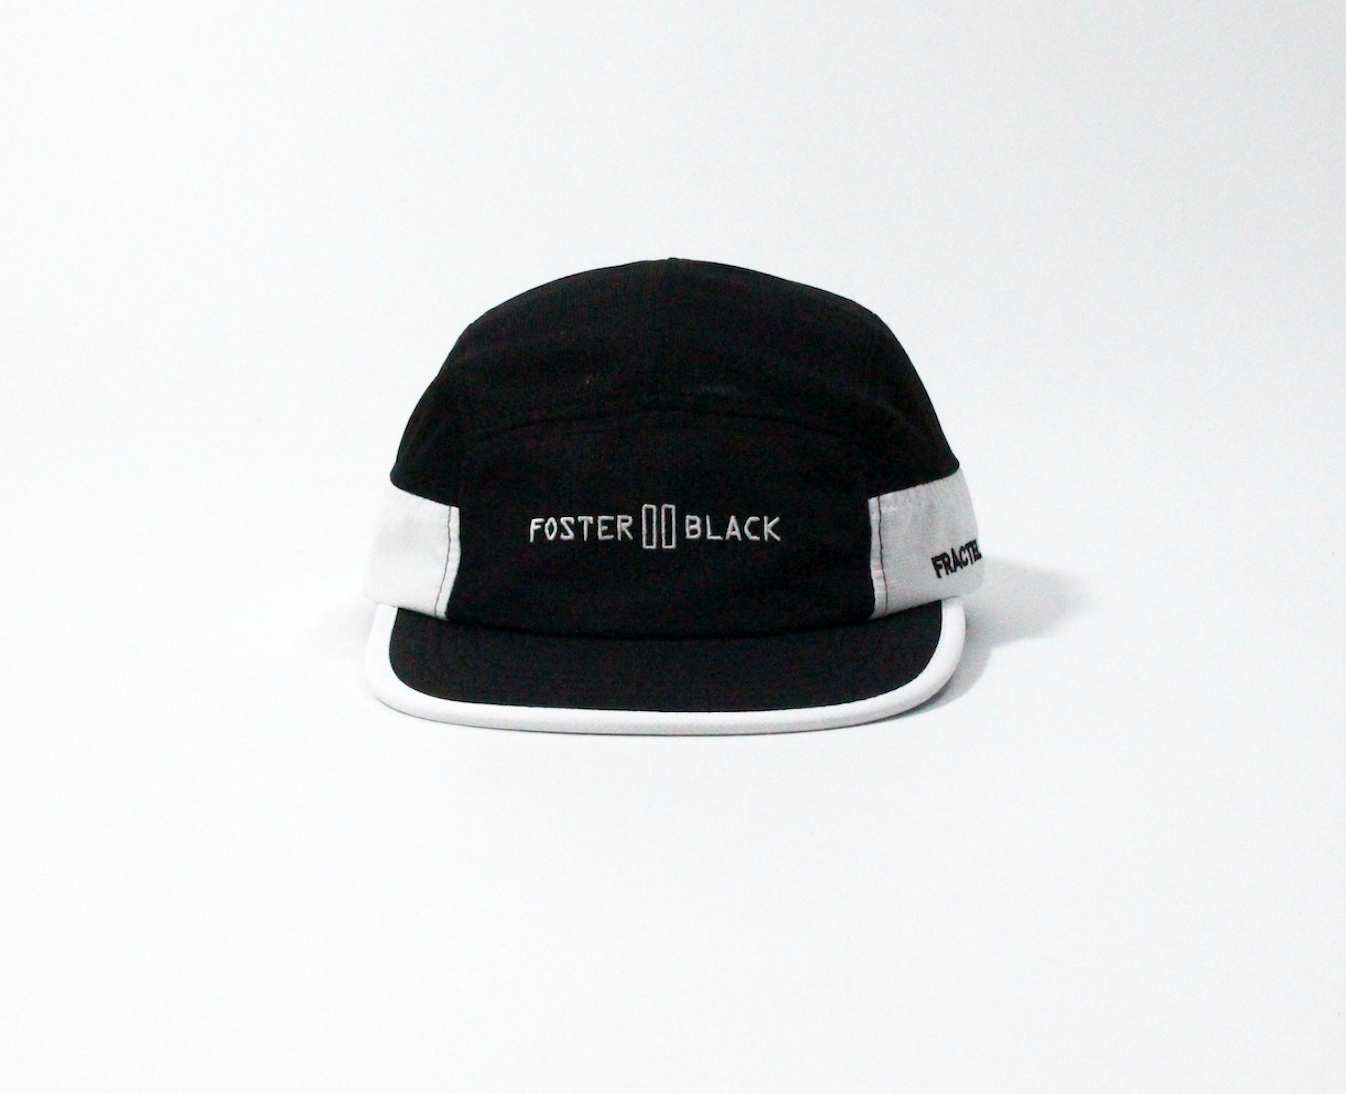 Foster & Black x Fractel Edition Cap